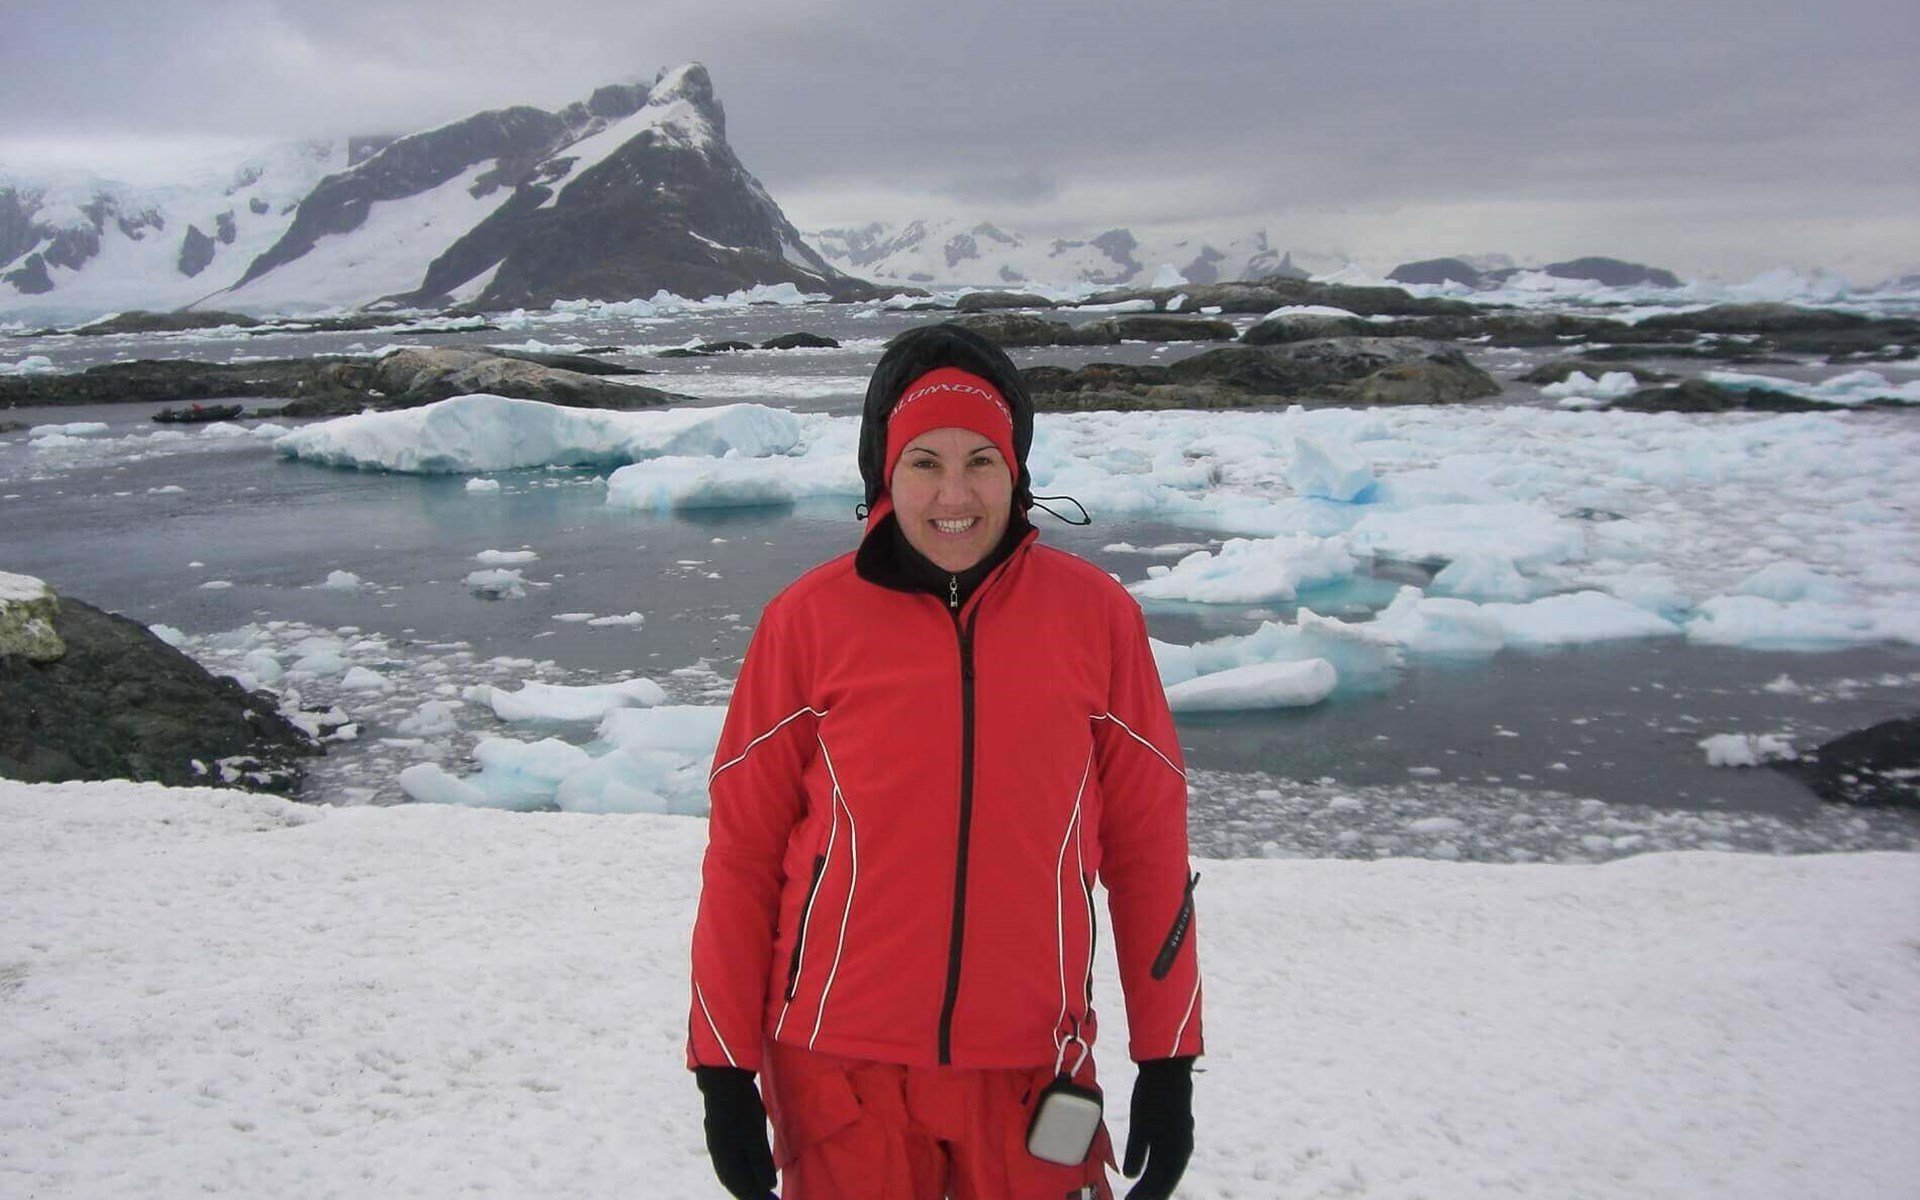 Clothing — what do you wear? – Australian Antarctic Program